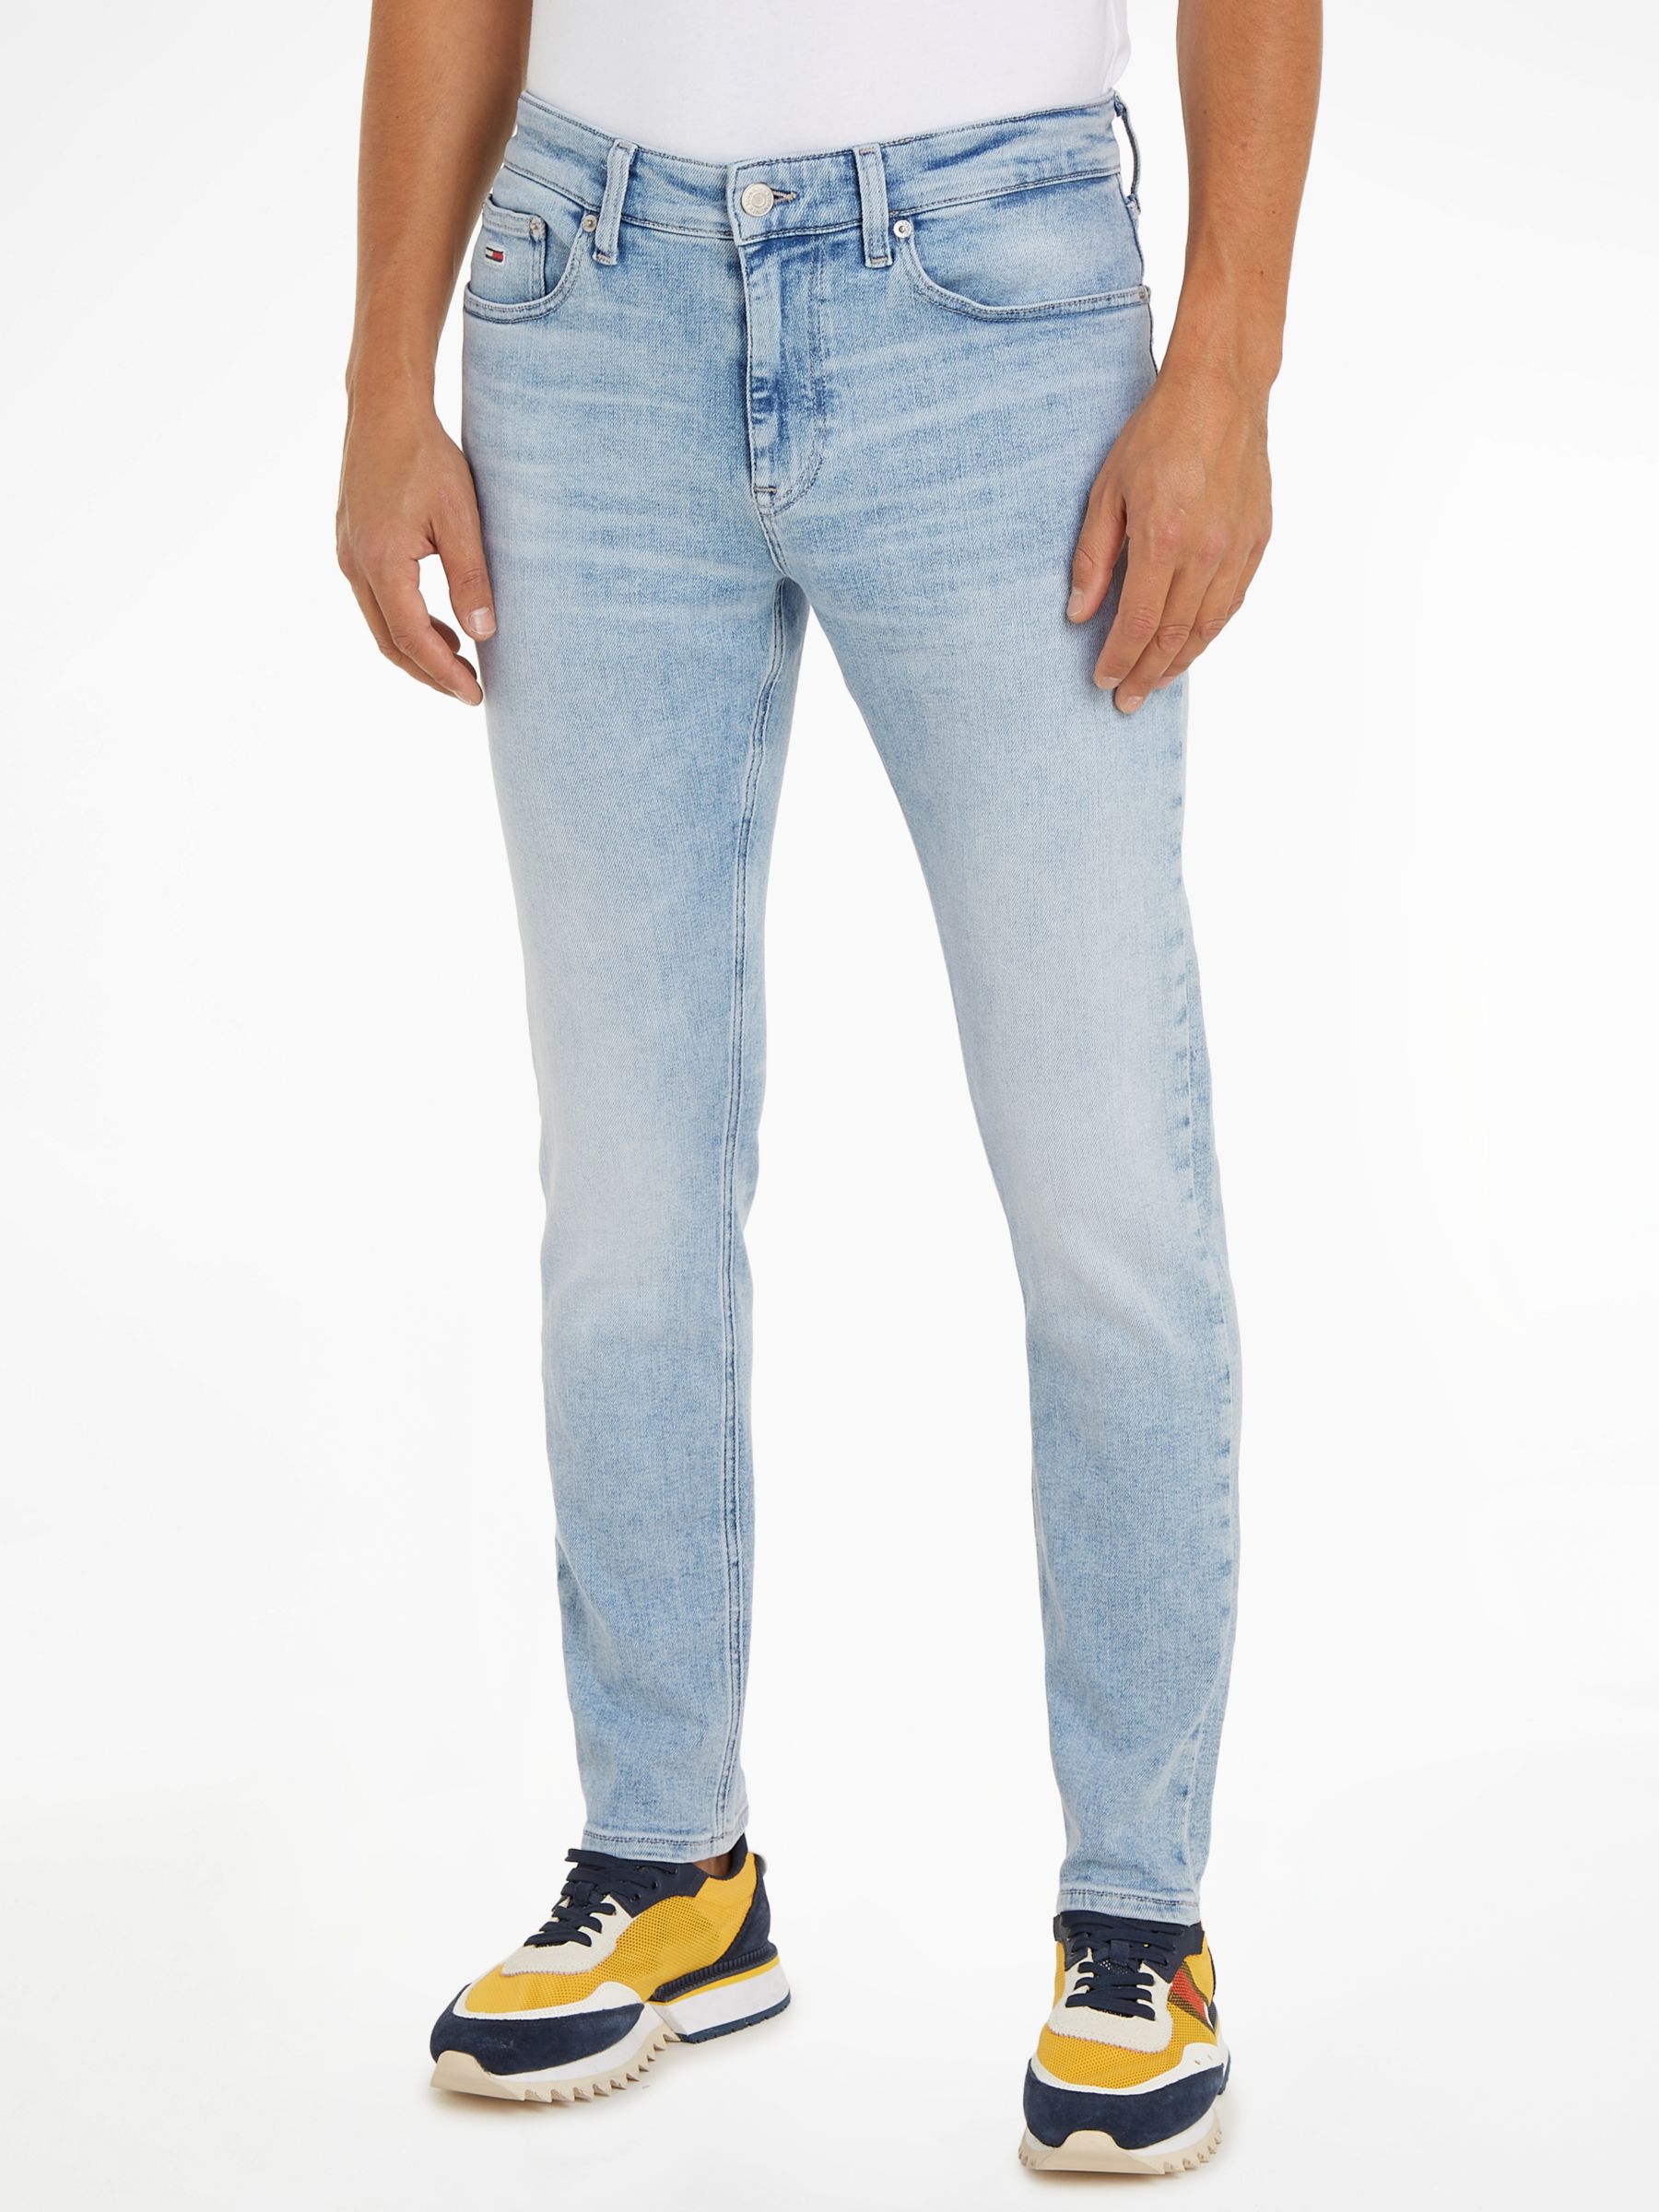 Tommy Jeans Austin Slim Fit Jeans, Denim Light, 34L